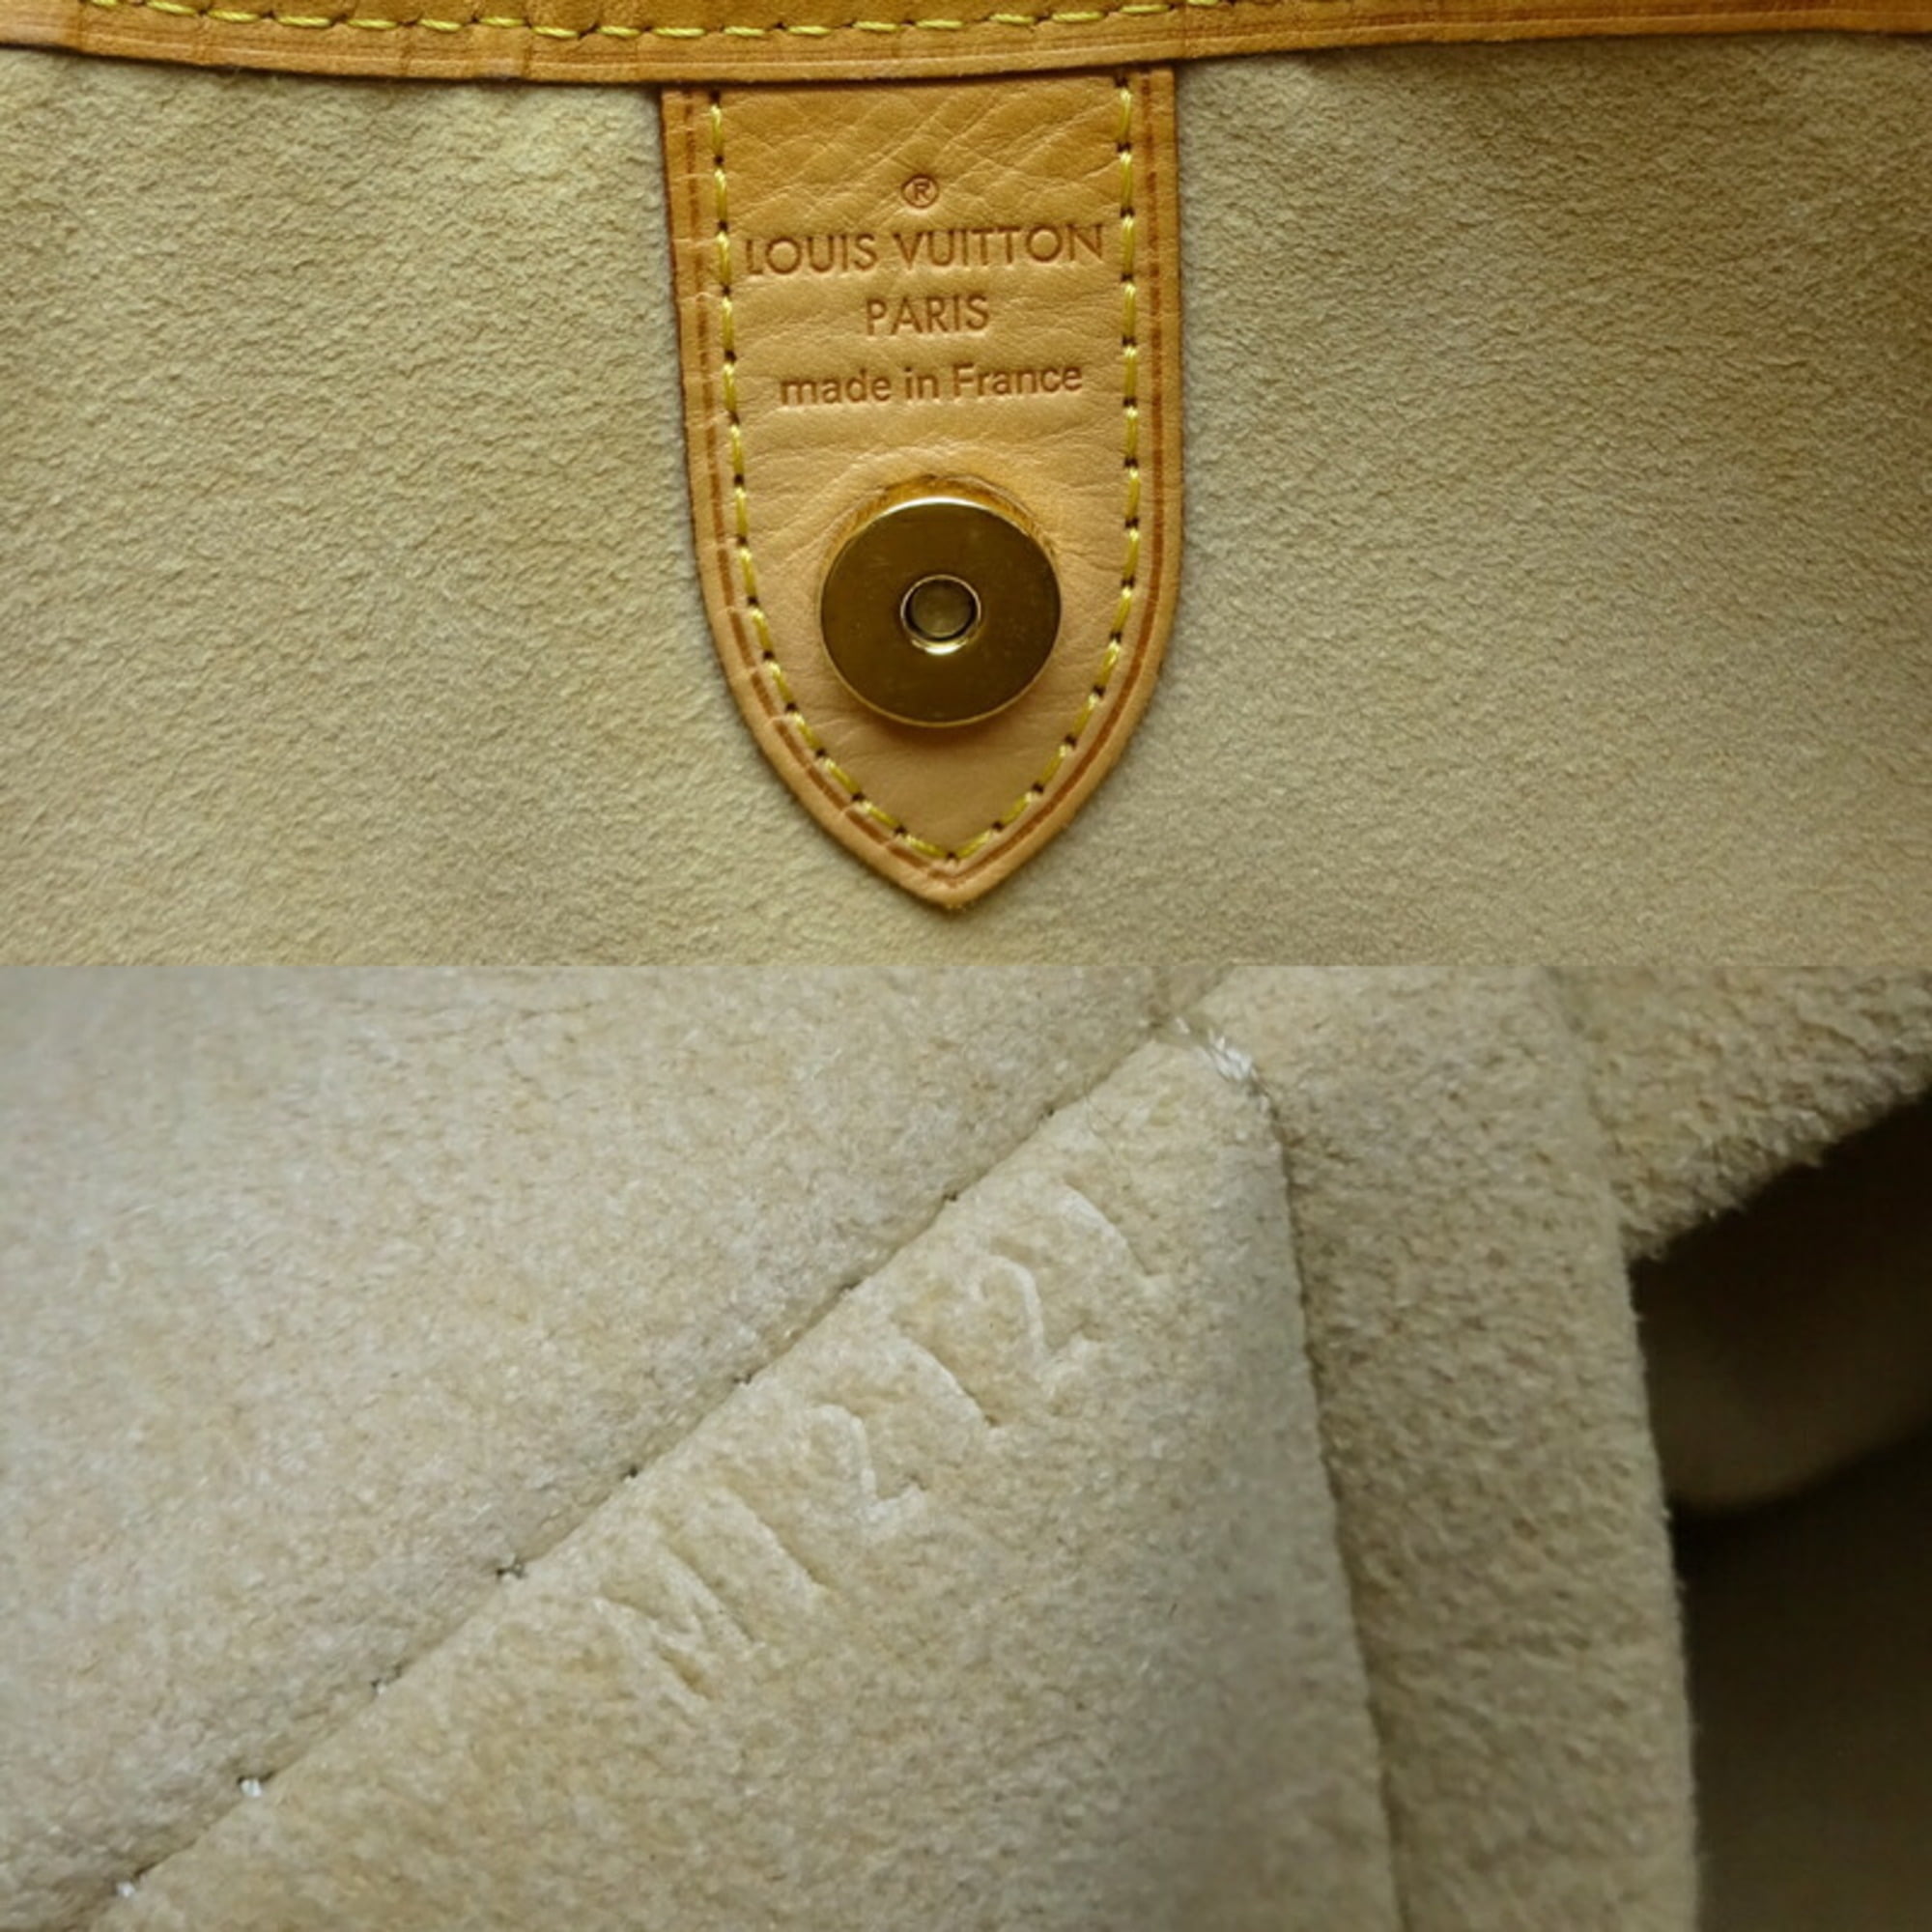 Brand New Louis Vuitton Galliera PM in Monogram M56382 (Authentic)